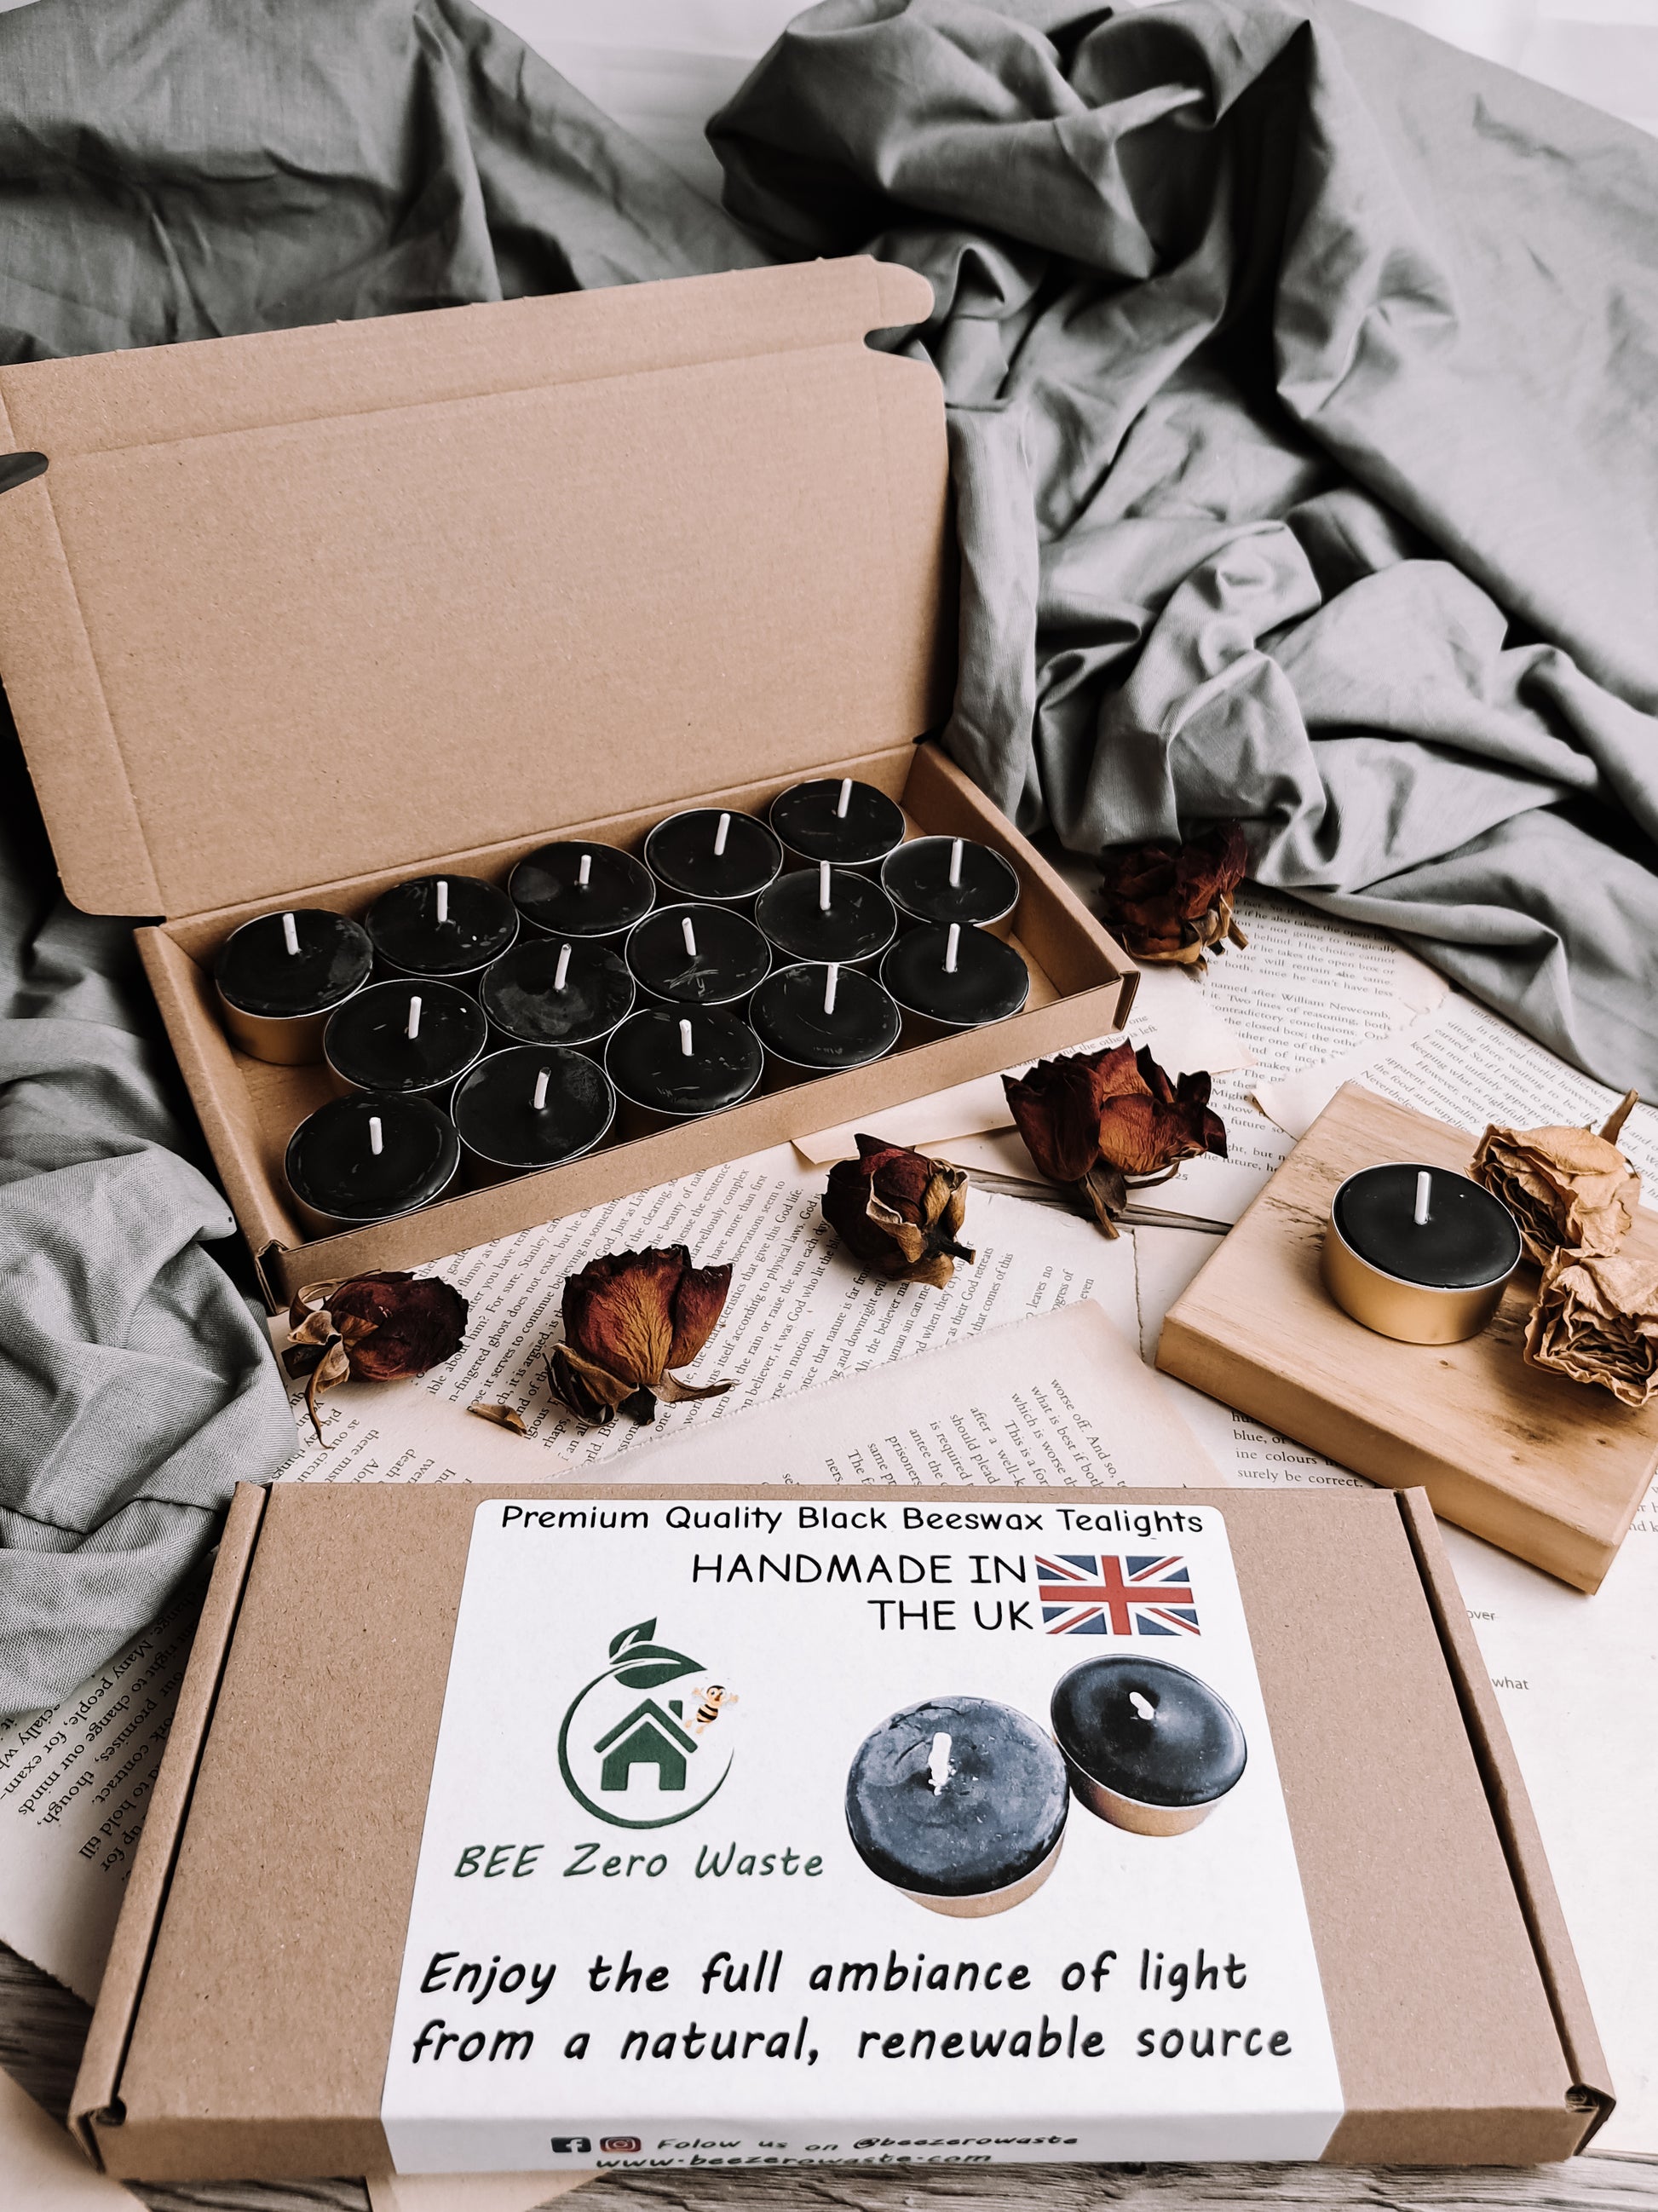 Black Beeswax Tealights, 100% beeswax tea candles, natural t lights - Handmade in UK beeswaxcandle.co.uk